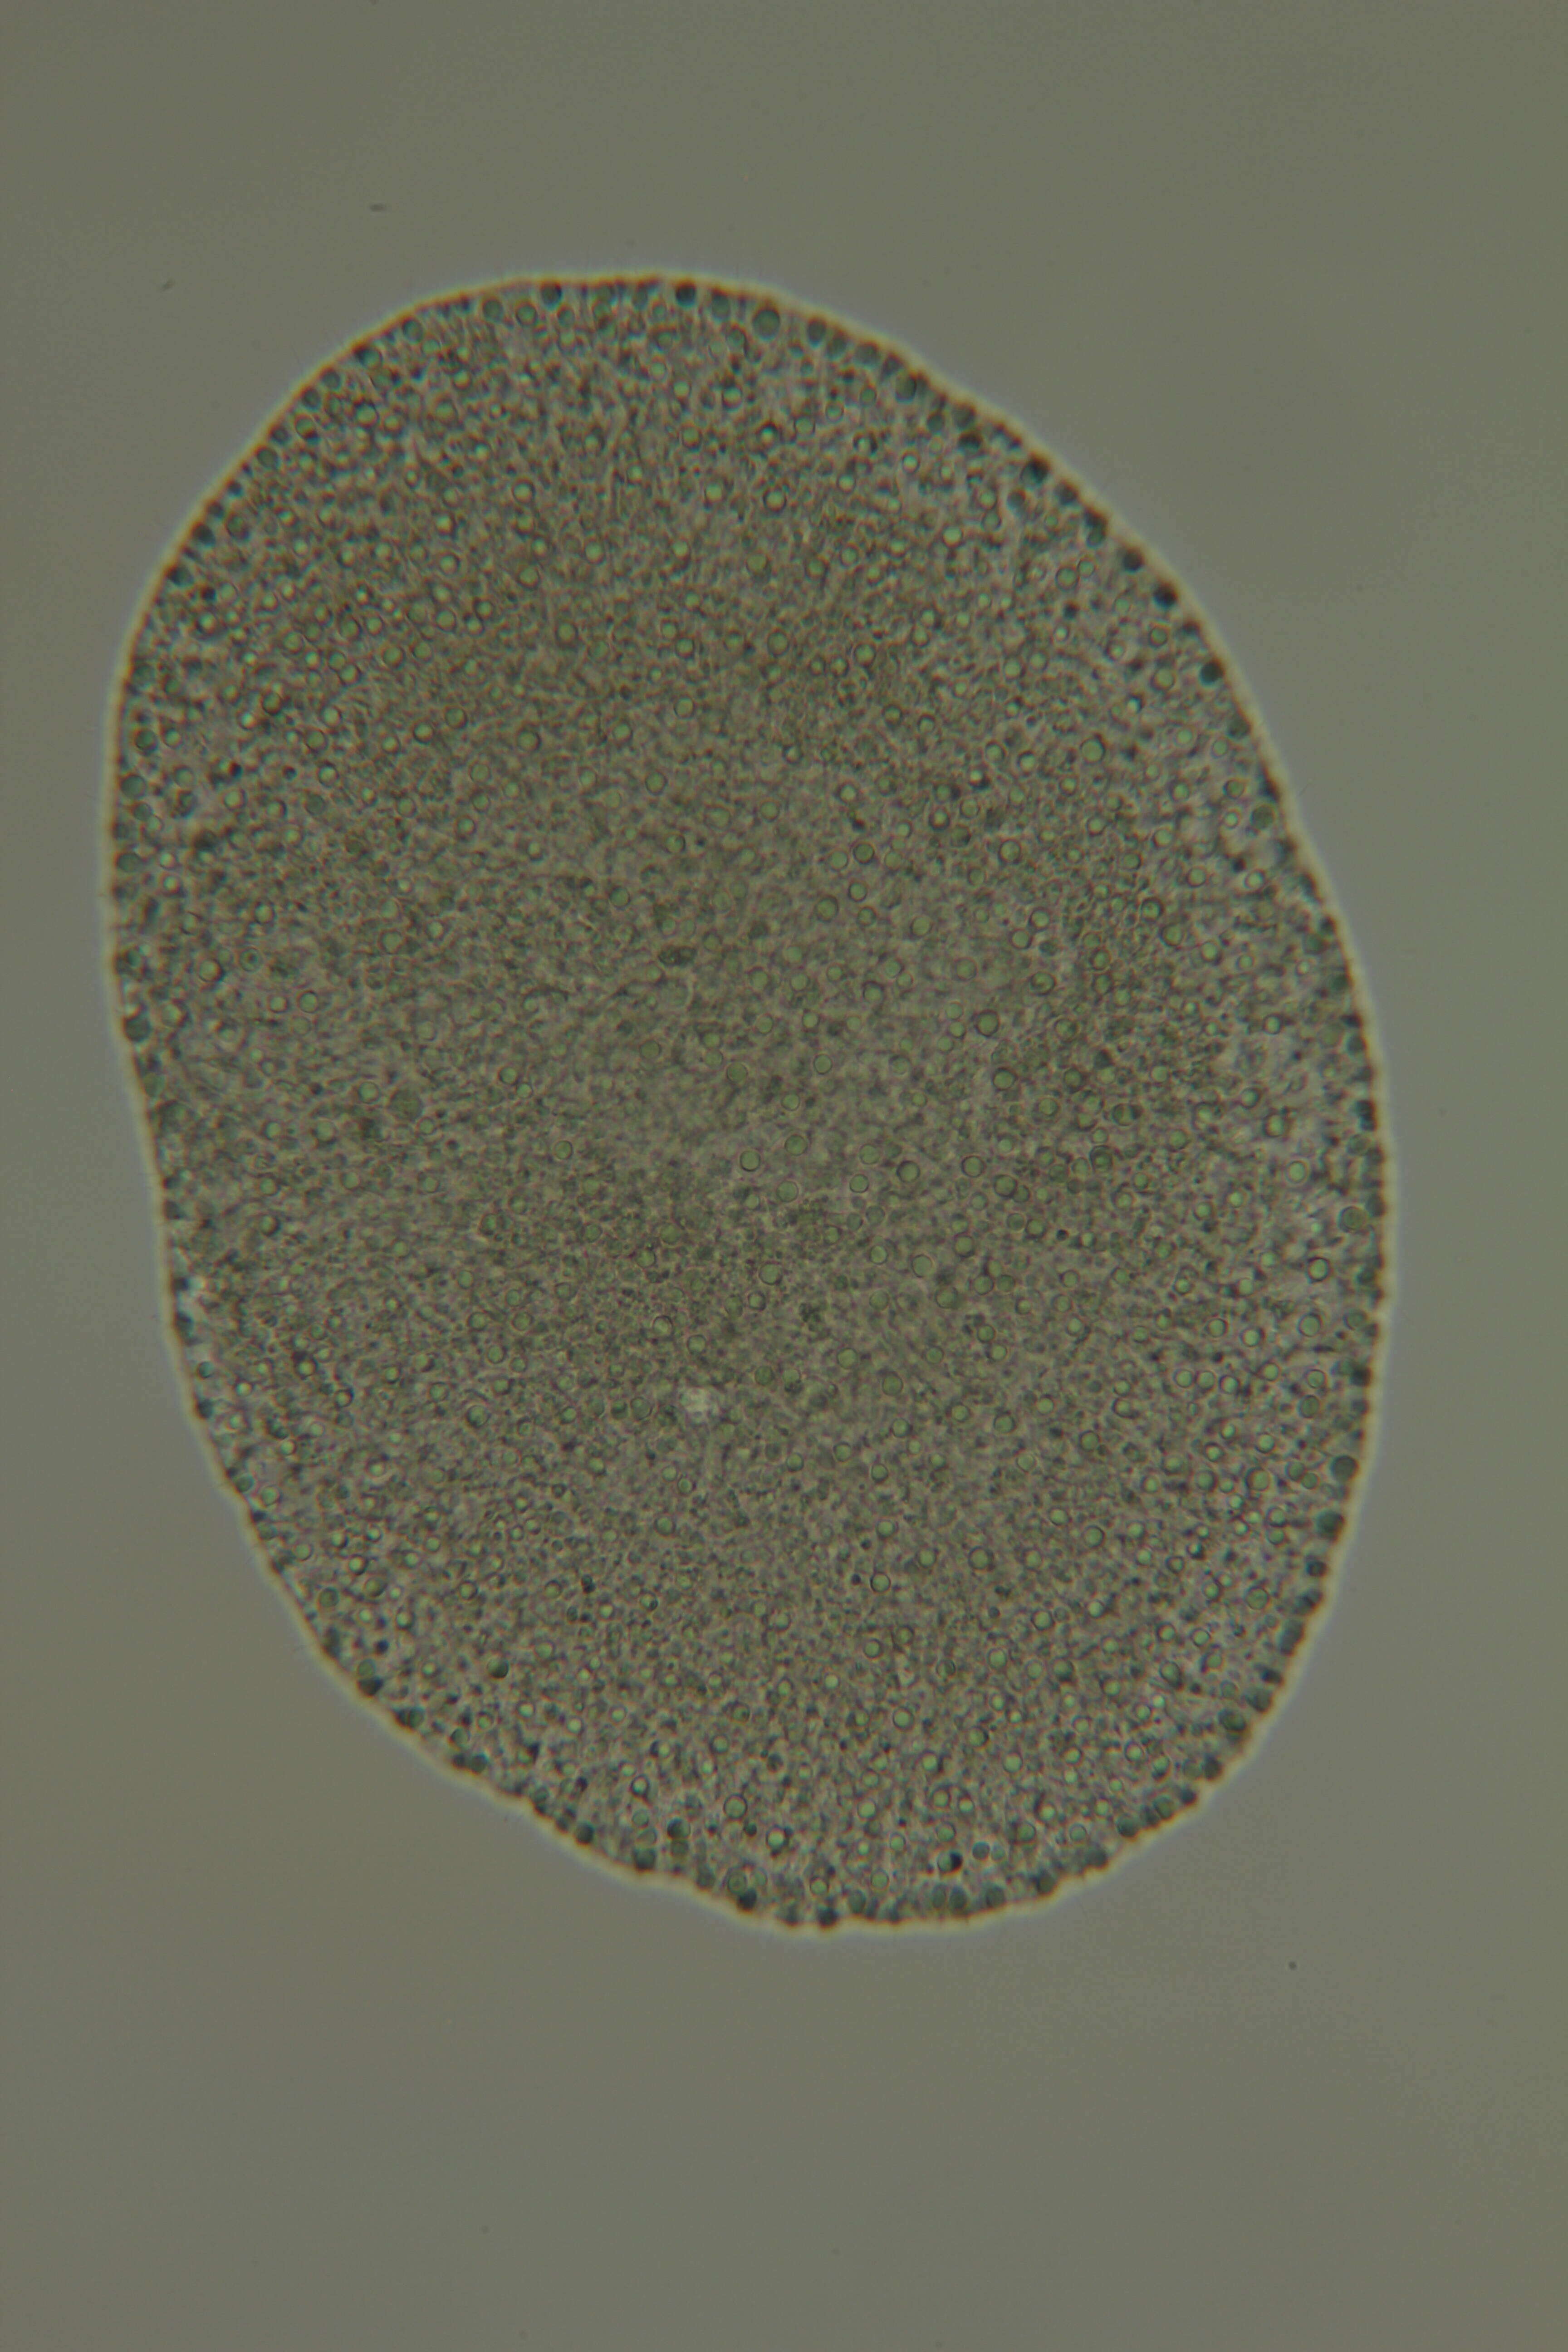 Image of placozoans